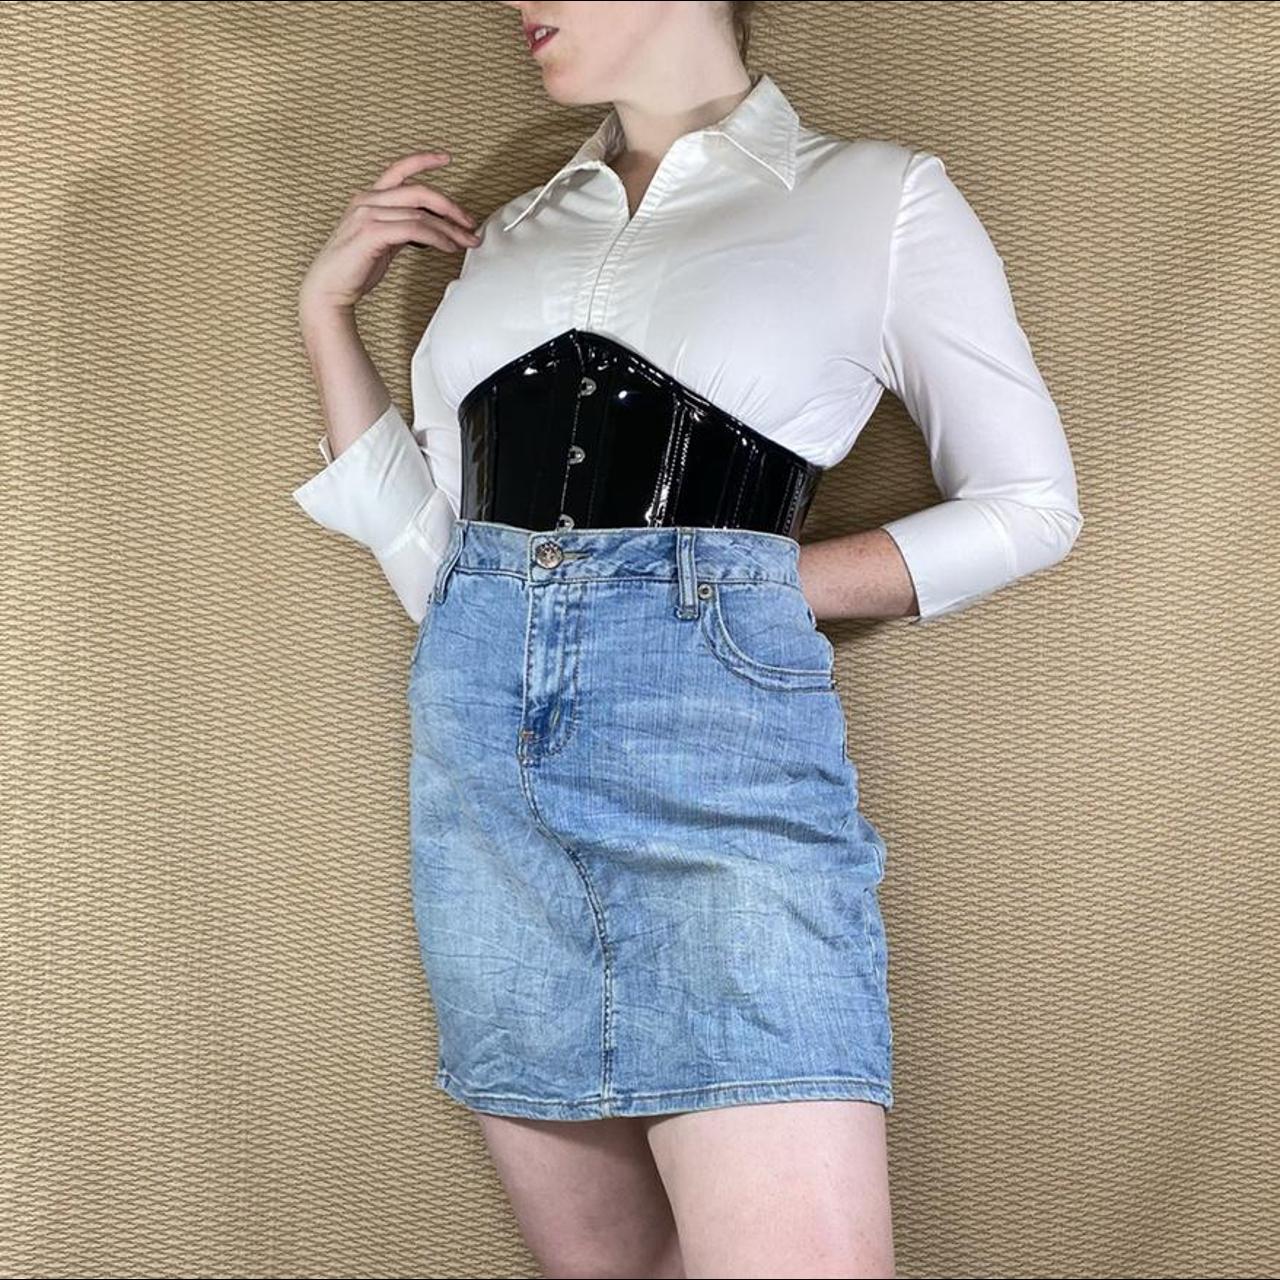 Product Image 1 - Midi jean skirt, size 18.

Clothing